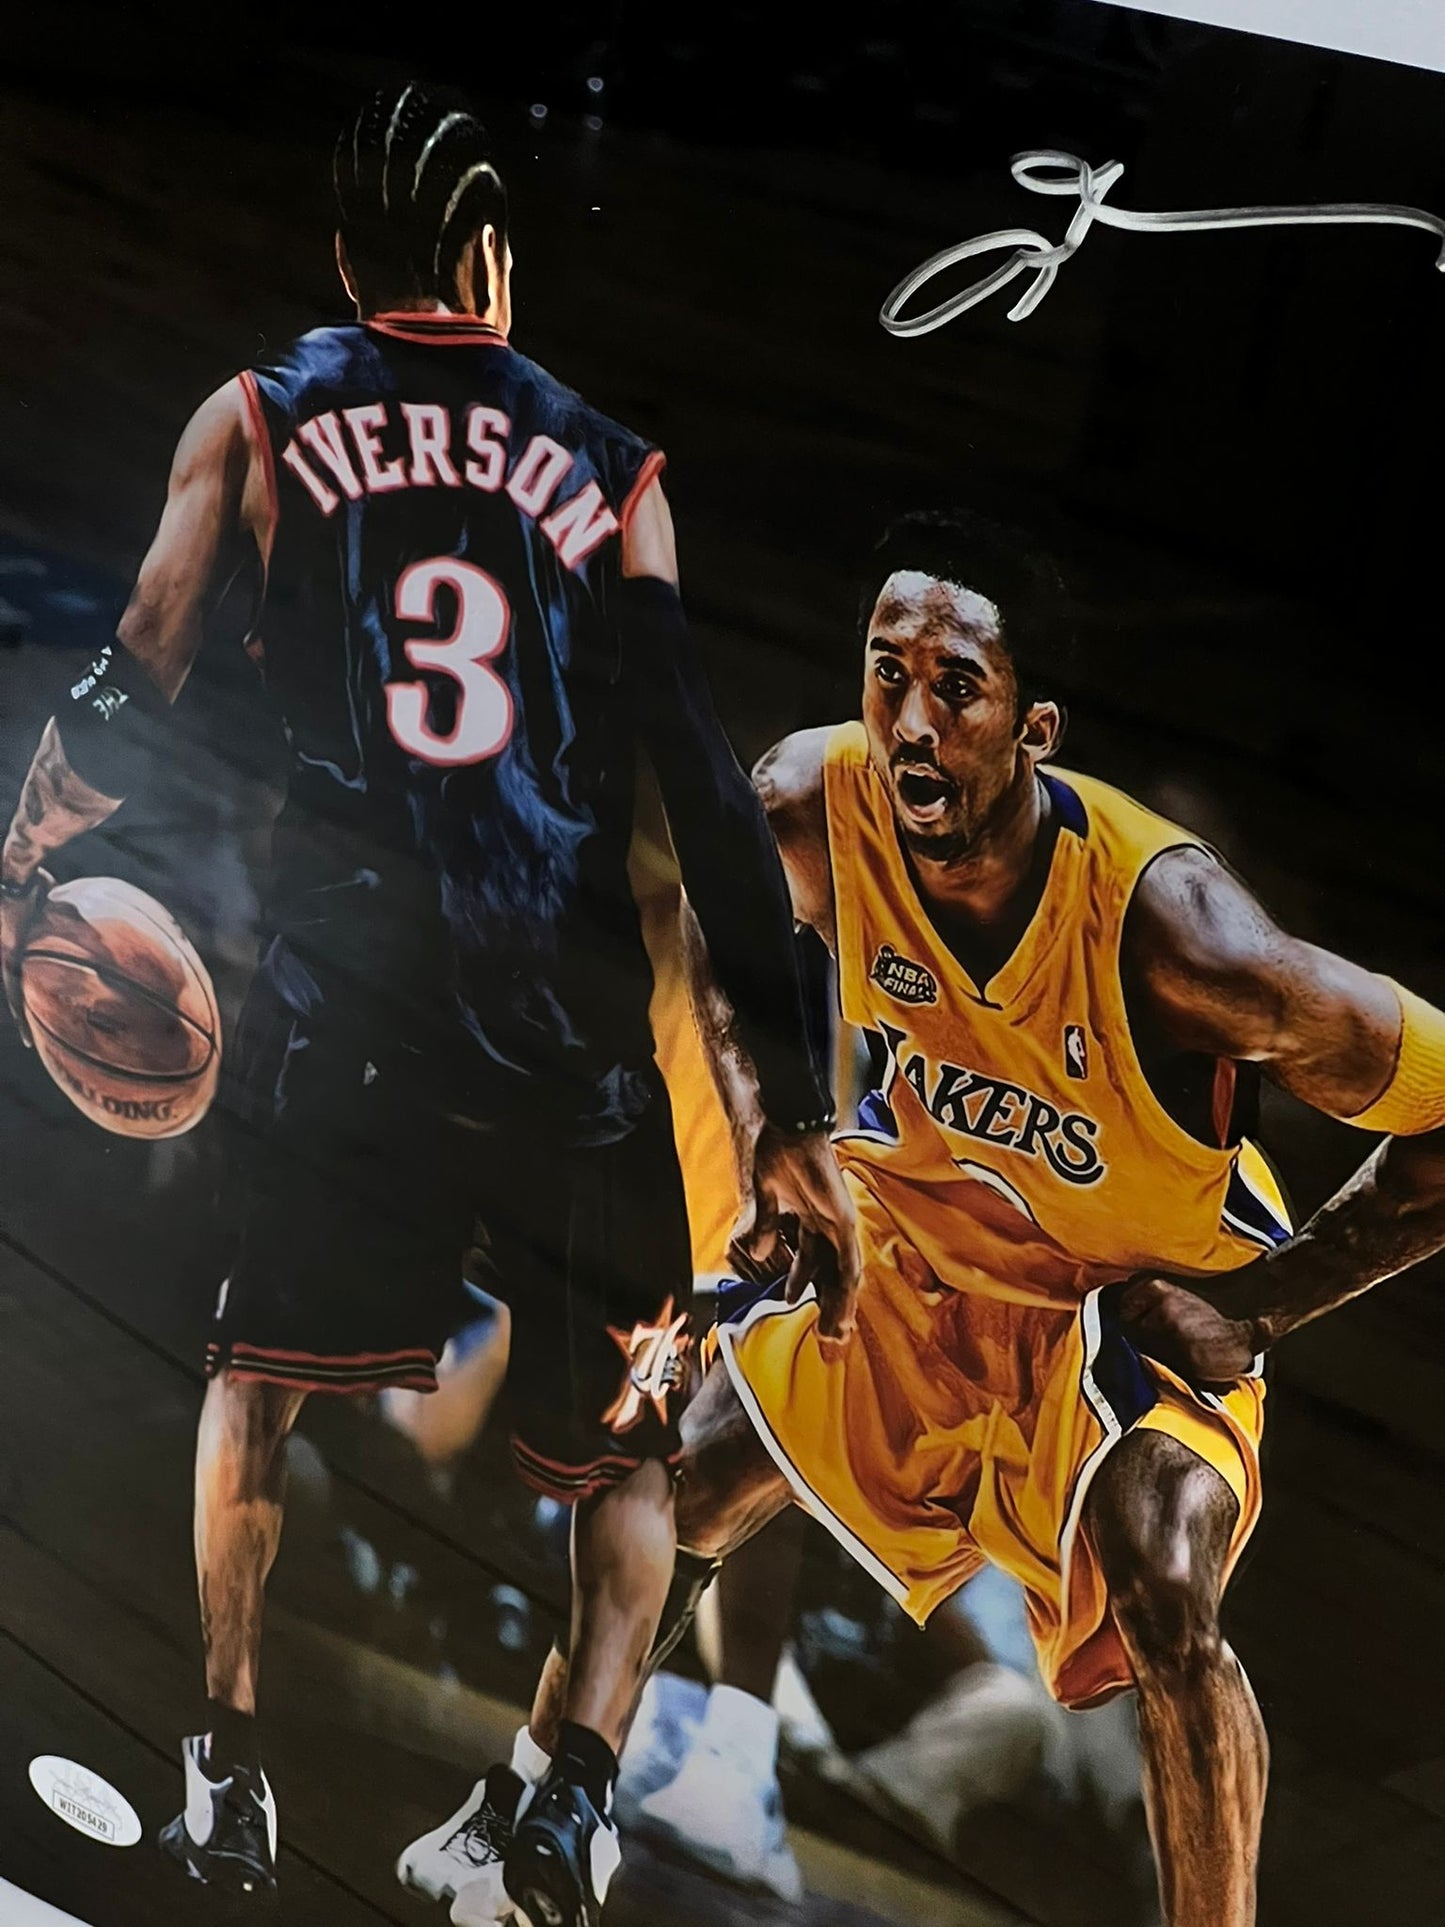 Allen Iverson vs Kobe Bryant signed photograph w/ COA  (framed) 16 x 20 inches